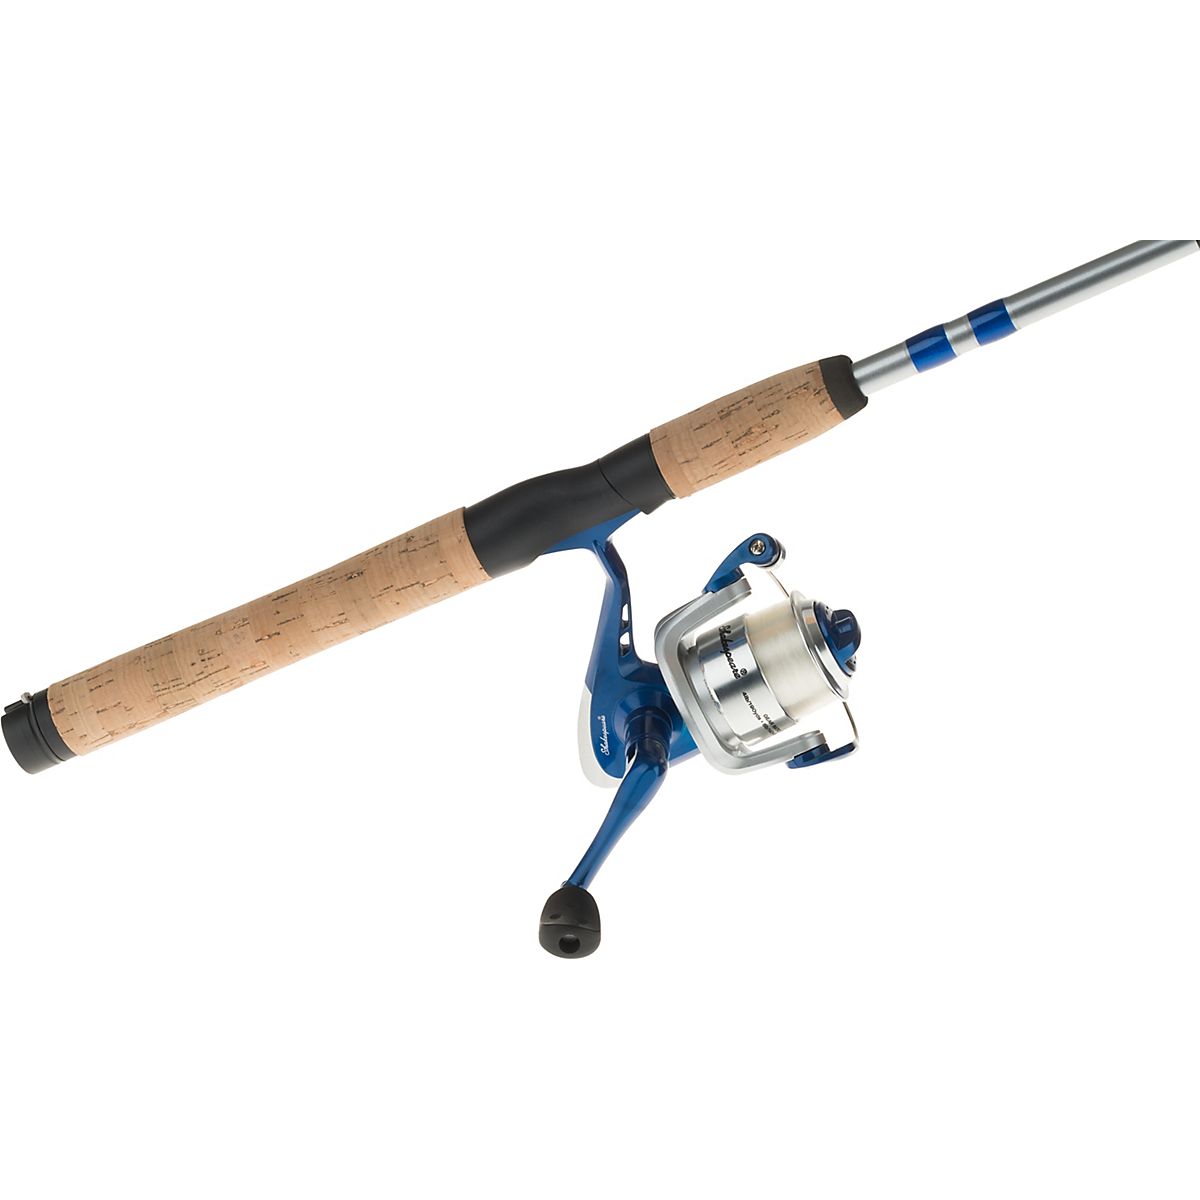 Fishing spinning combo 6 foot rod, prespooled reel - CG Emery